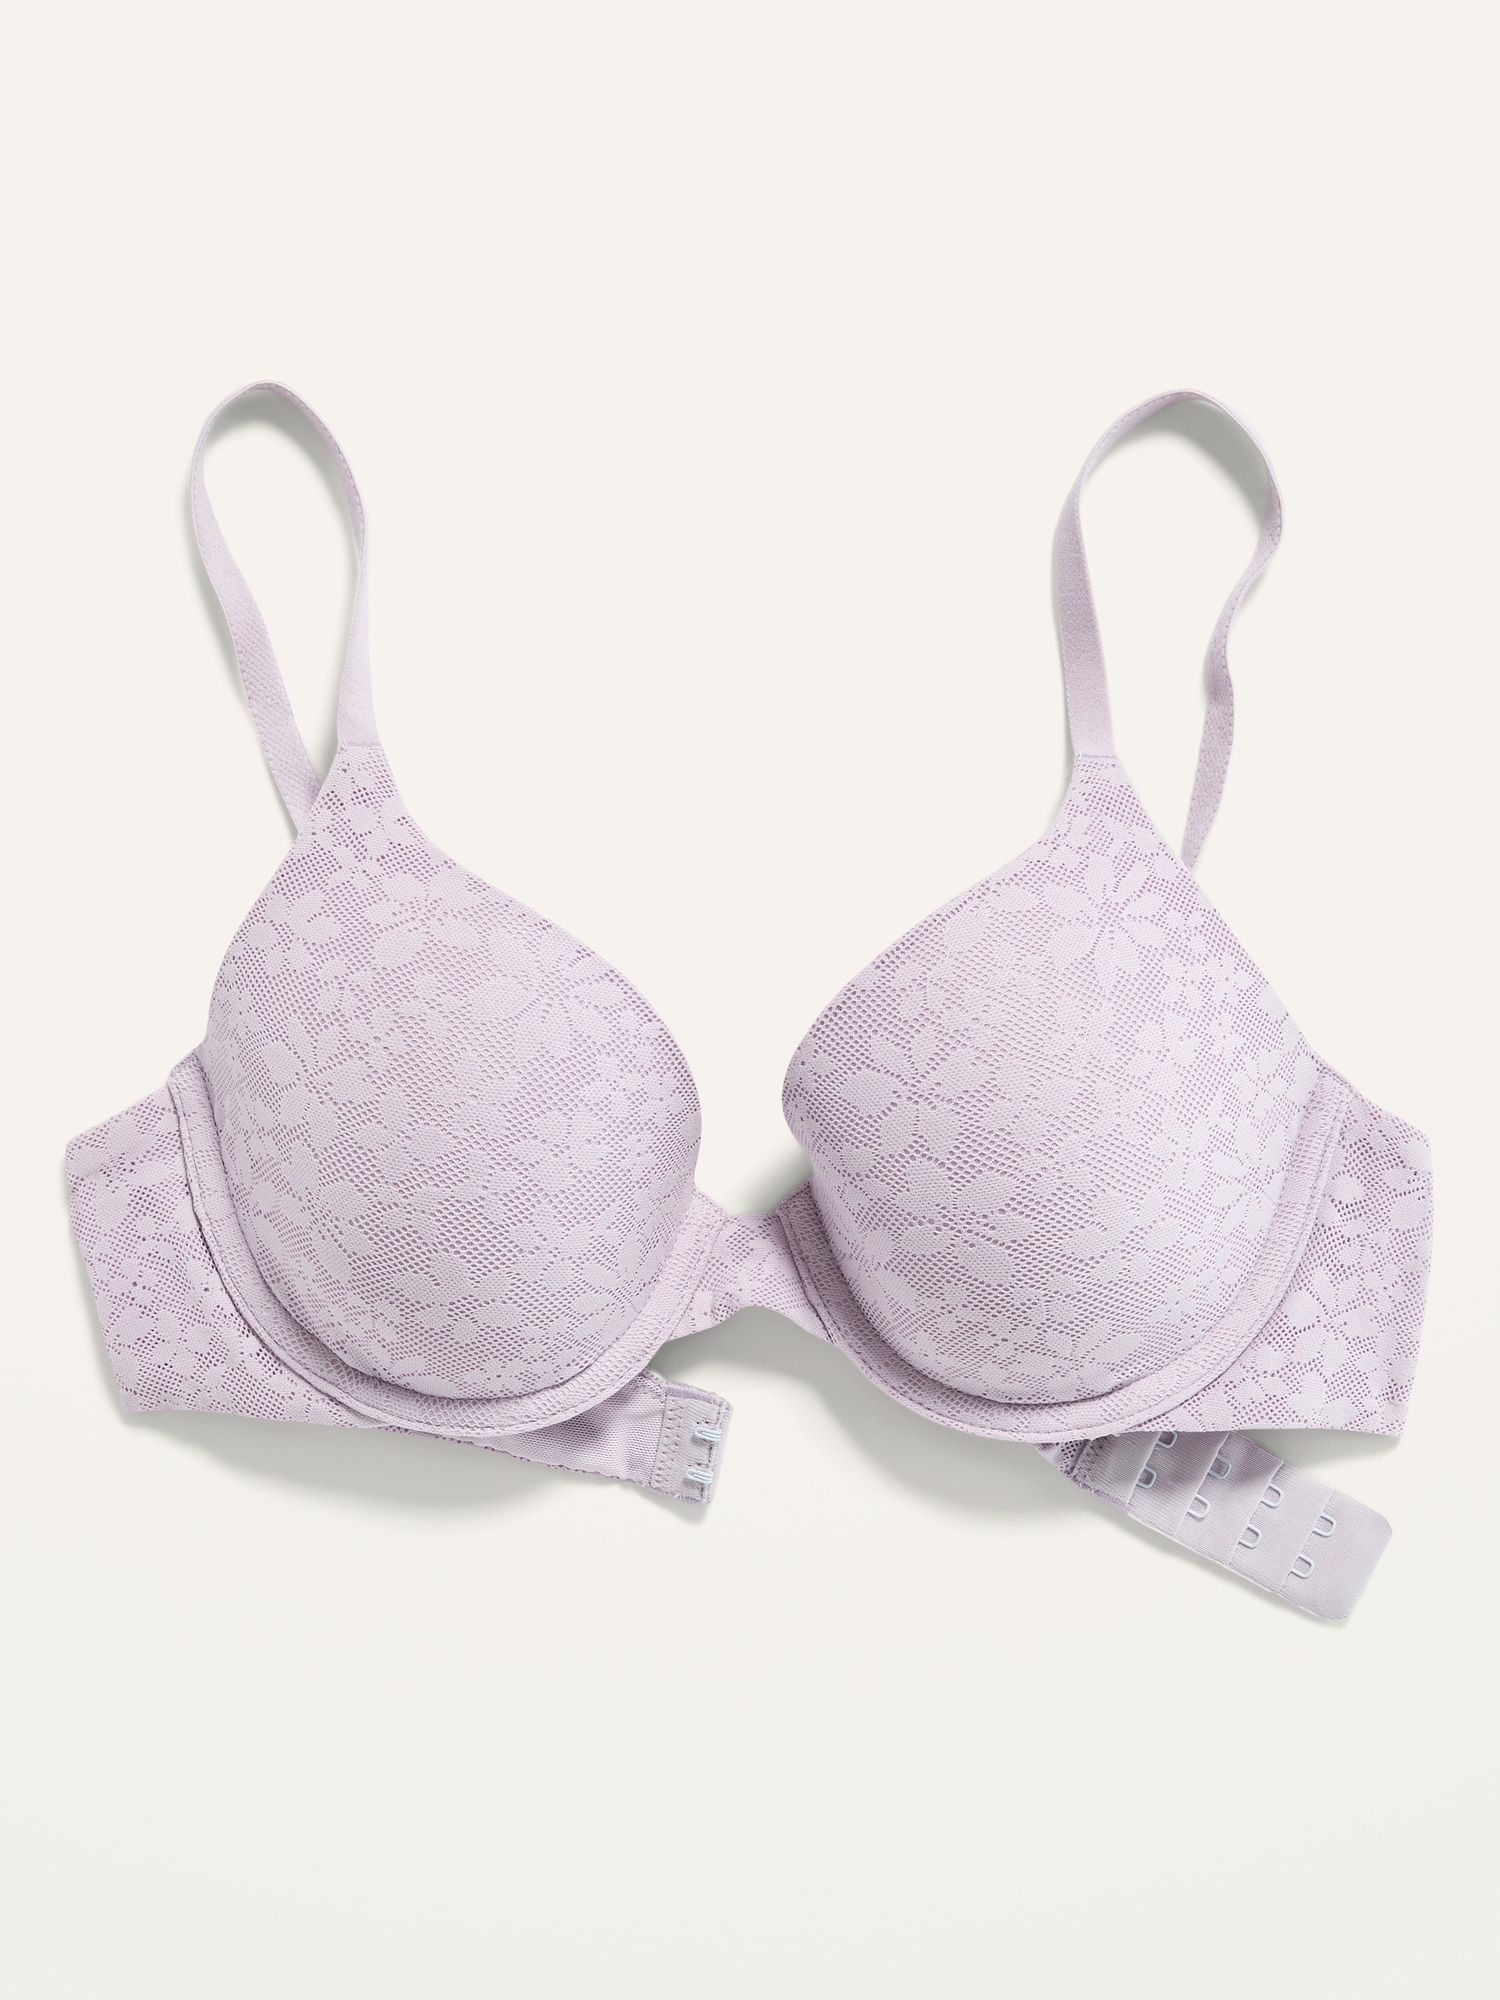 Victoria’s secret pink everywhere Super push up bra size 40B VS New So Cute  